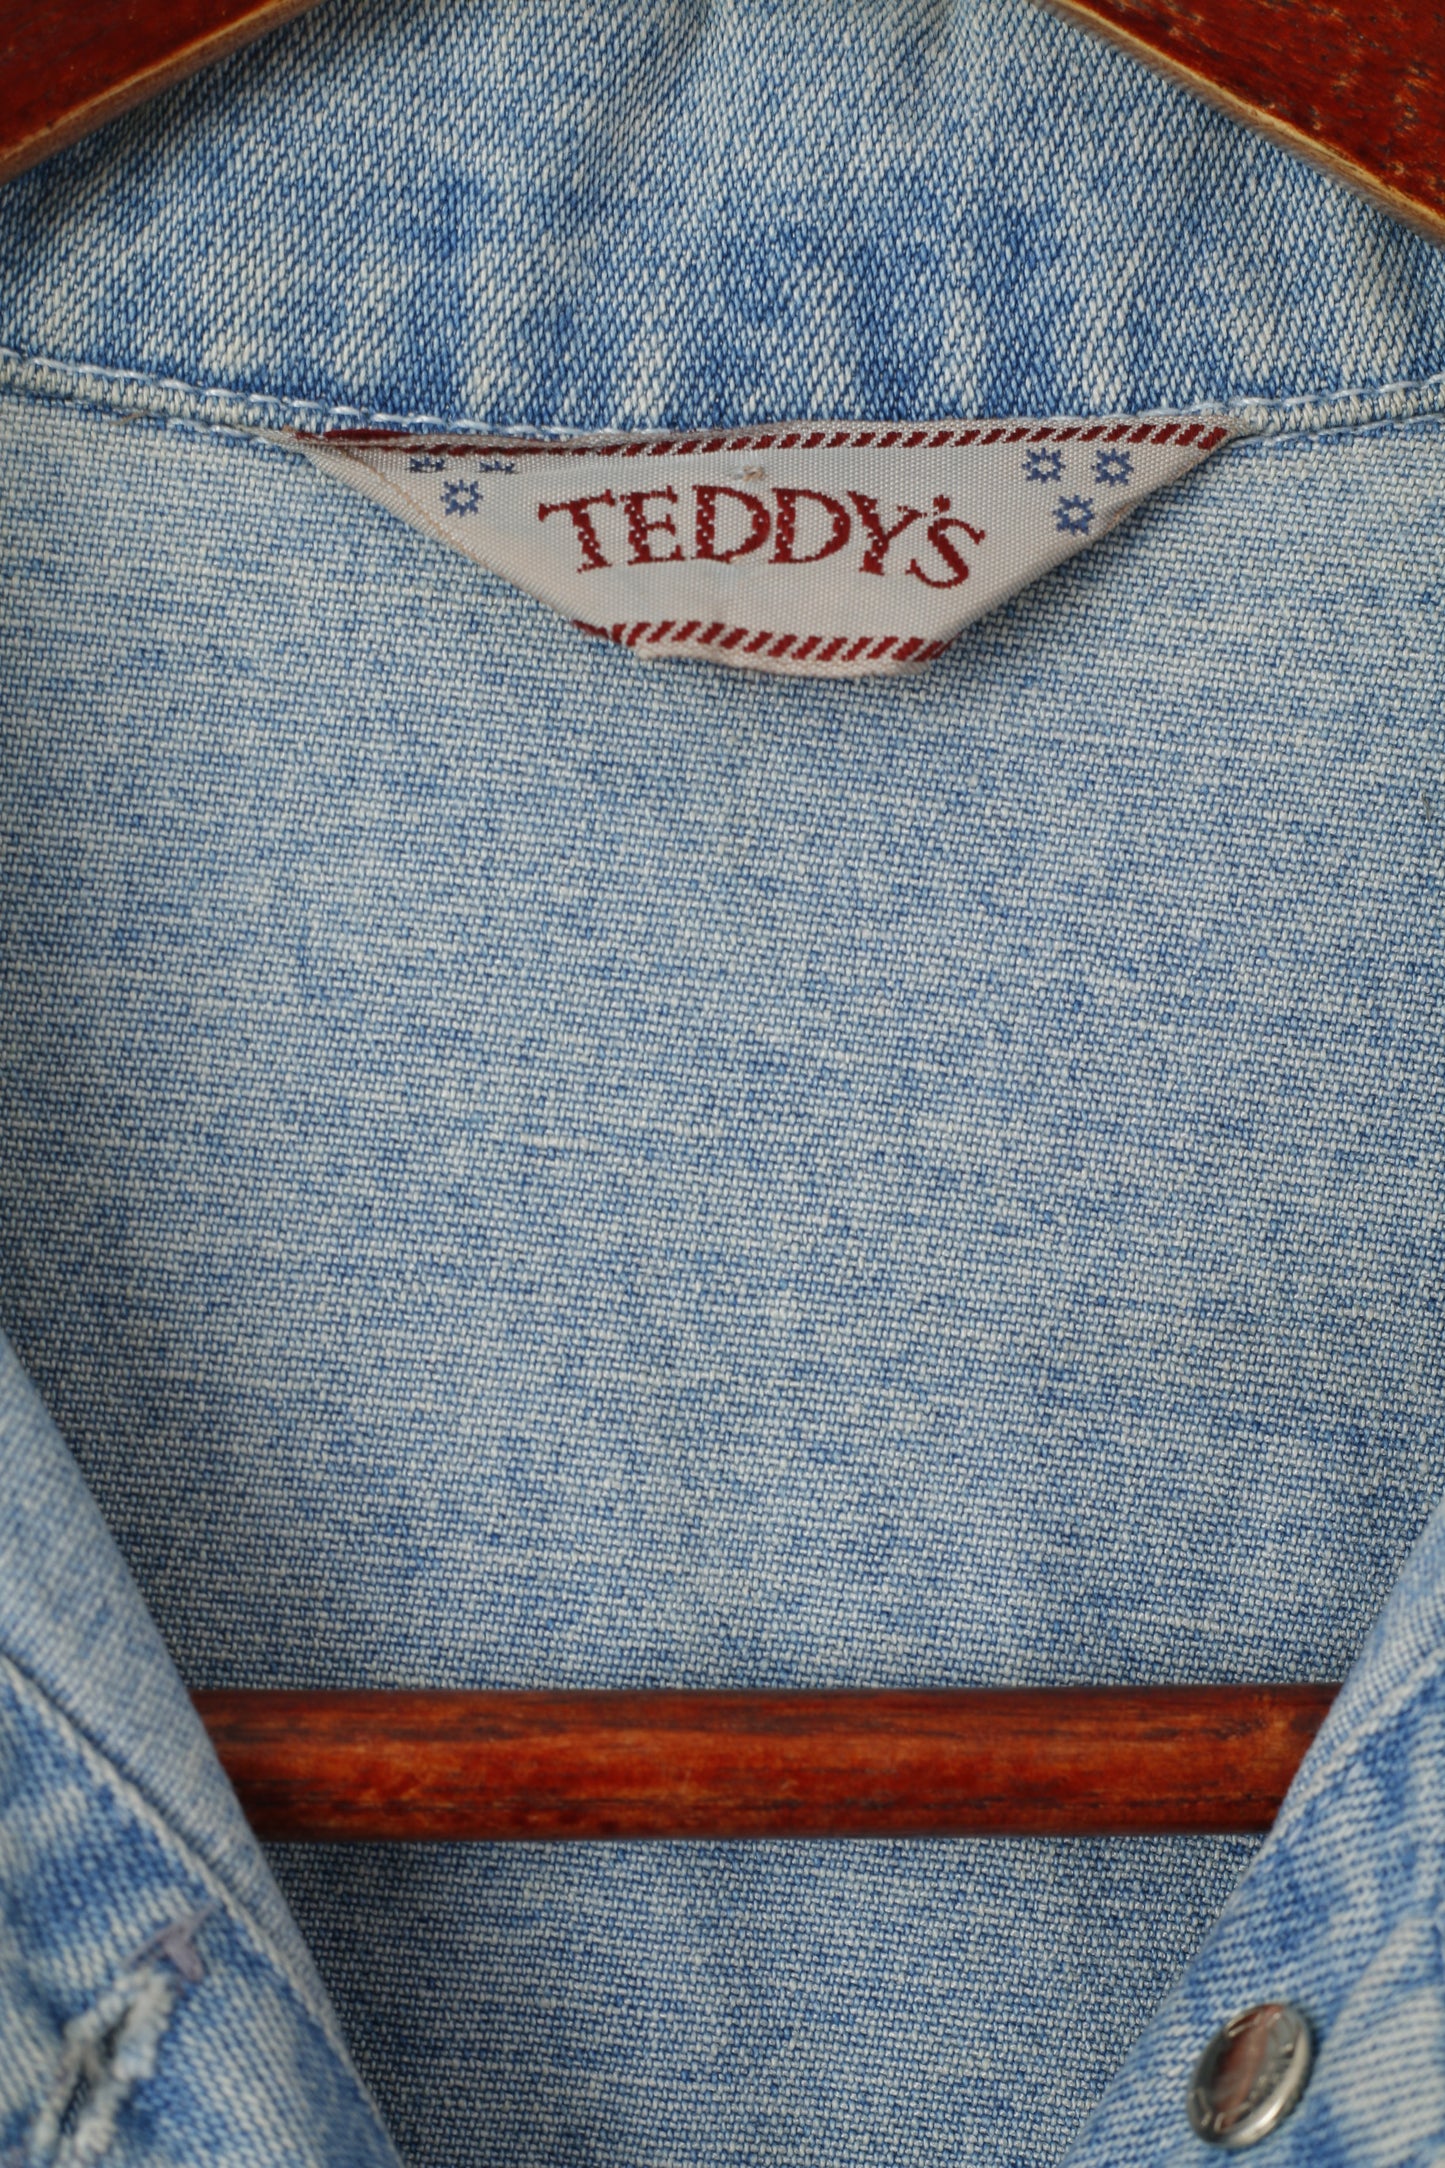 Teddy's Women 42 S/M Denim Dress Blue Vintage 90s Sleeveless Jeans Cotton